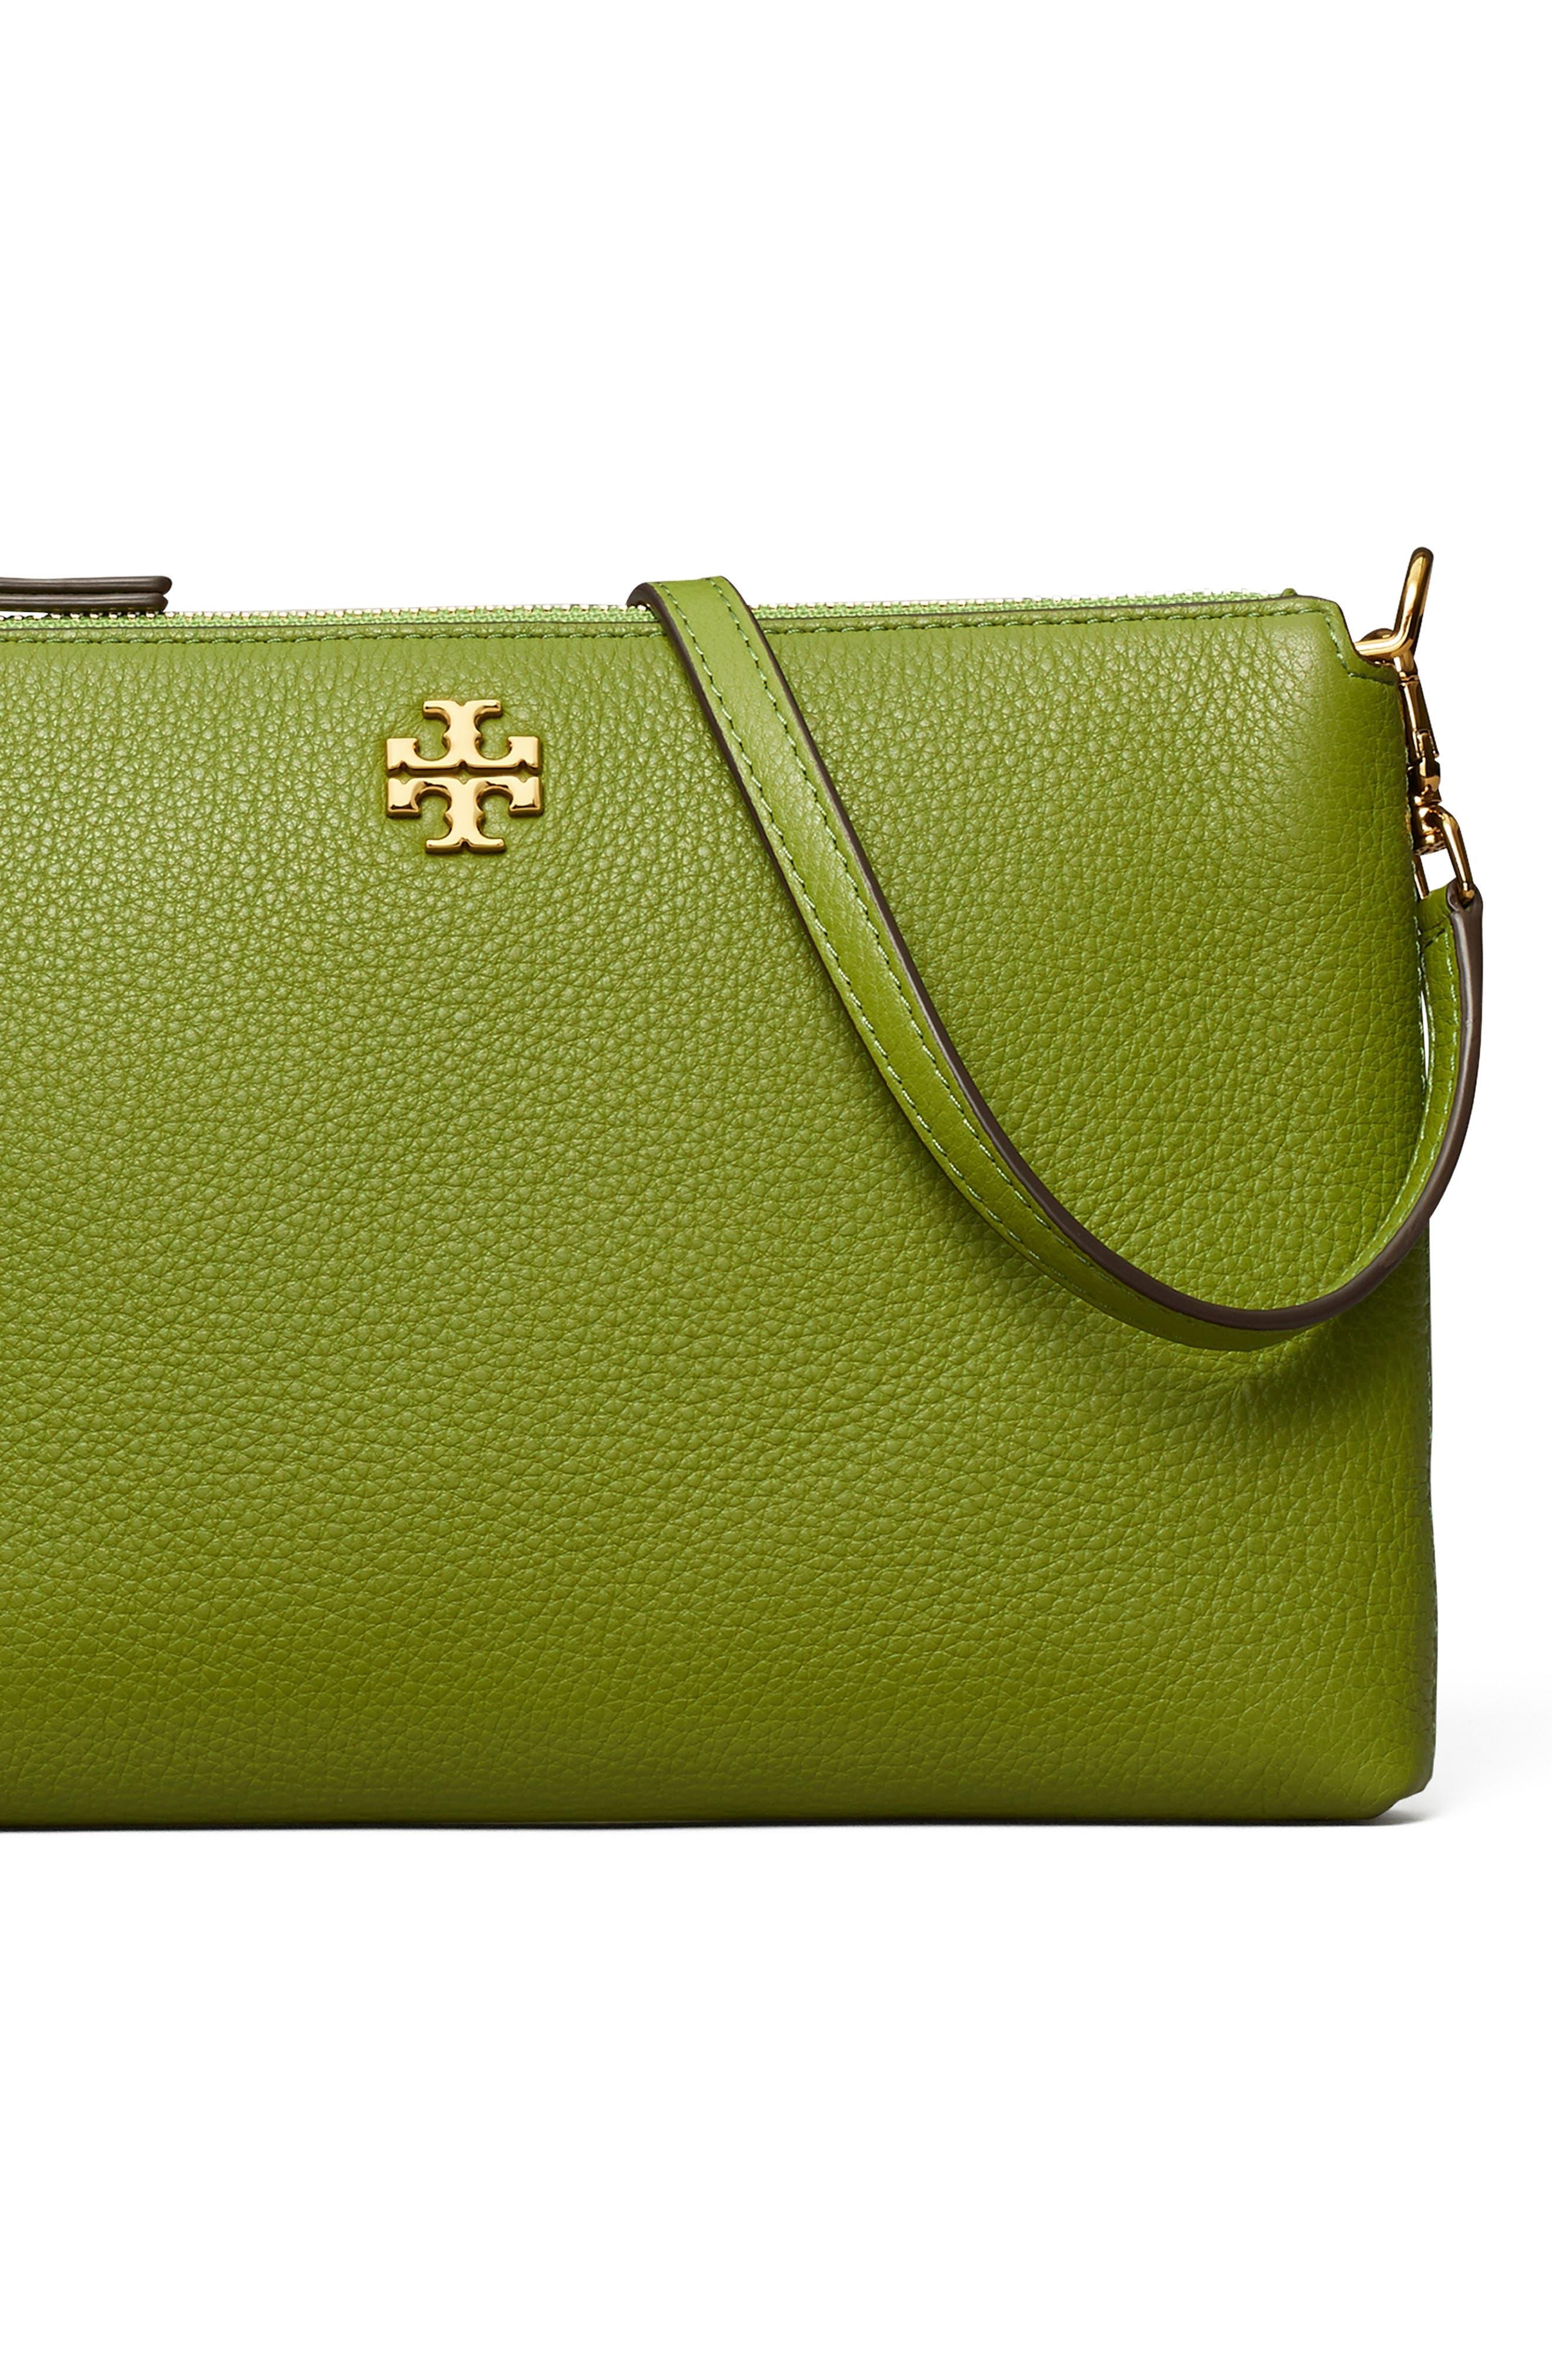 Tory Burch Kira Pebbled Leather Wallet Crossbody Bag in Green | Lyst